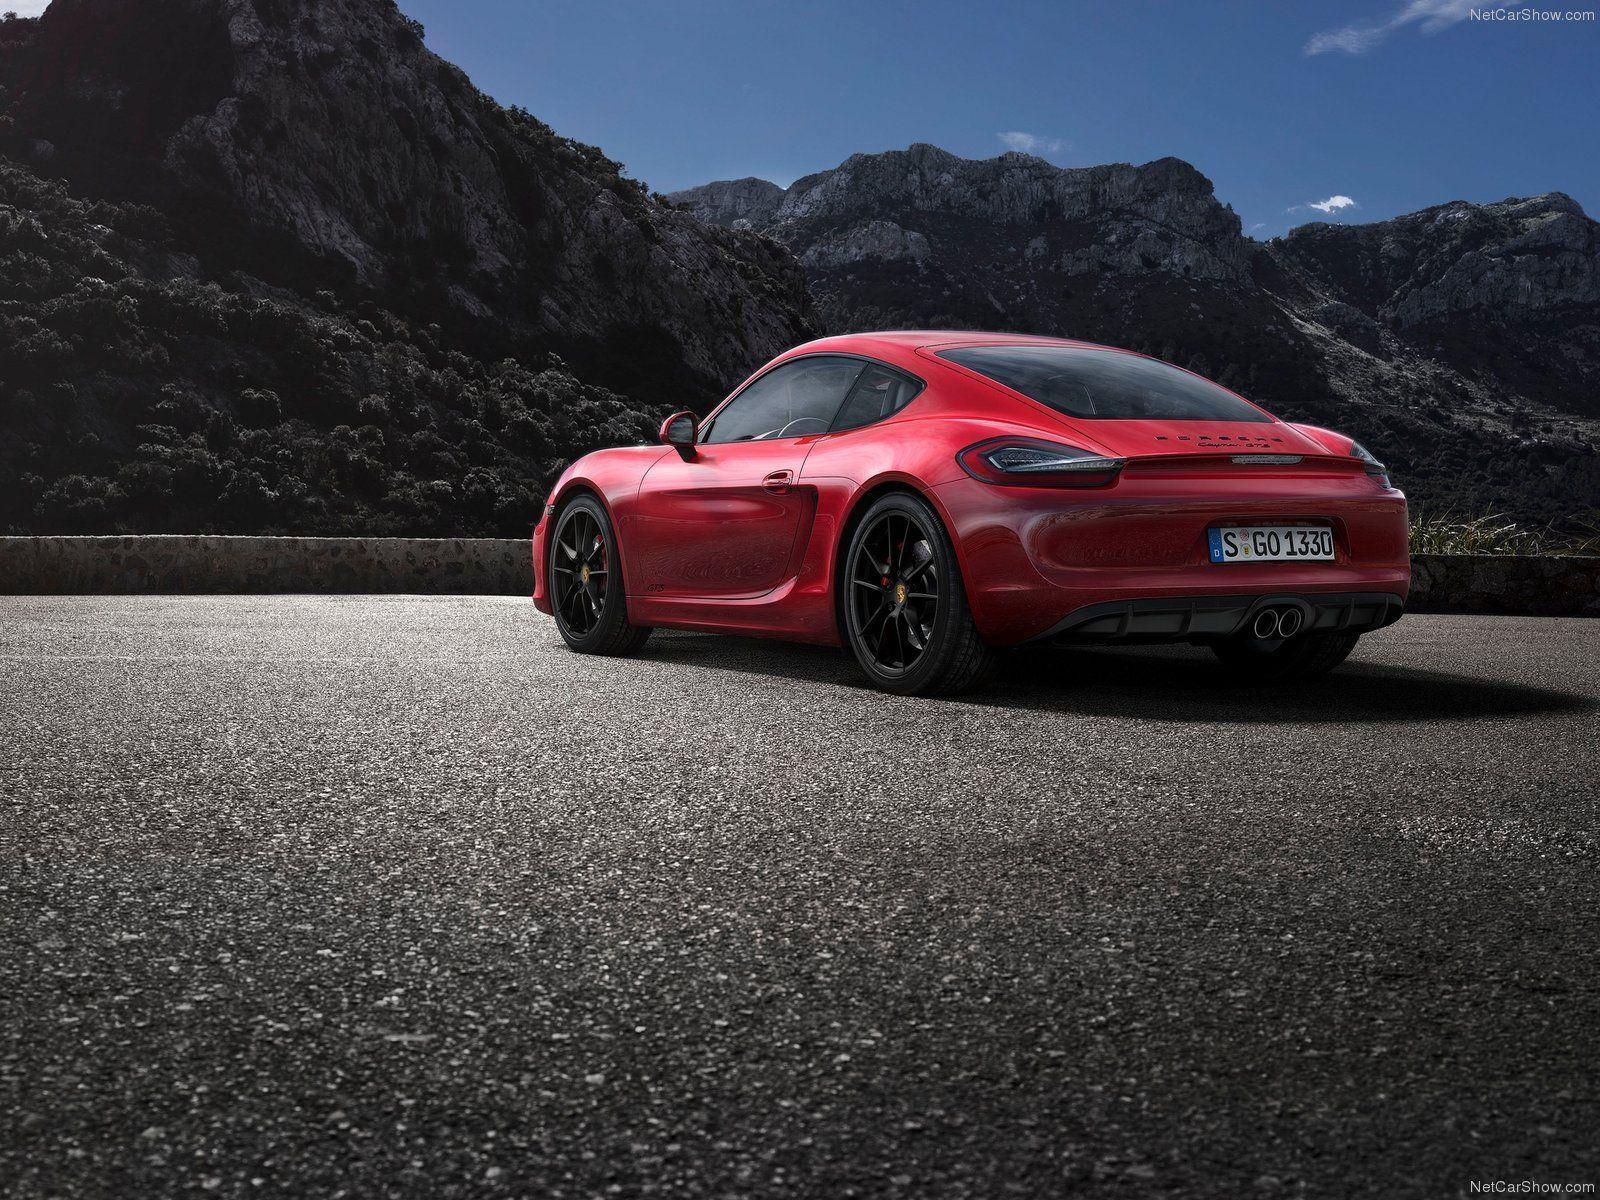 Porsche Cayenne GTS Wallpaper and Theme. Download free